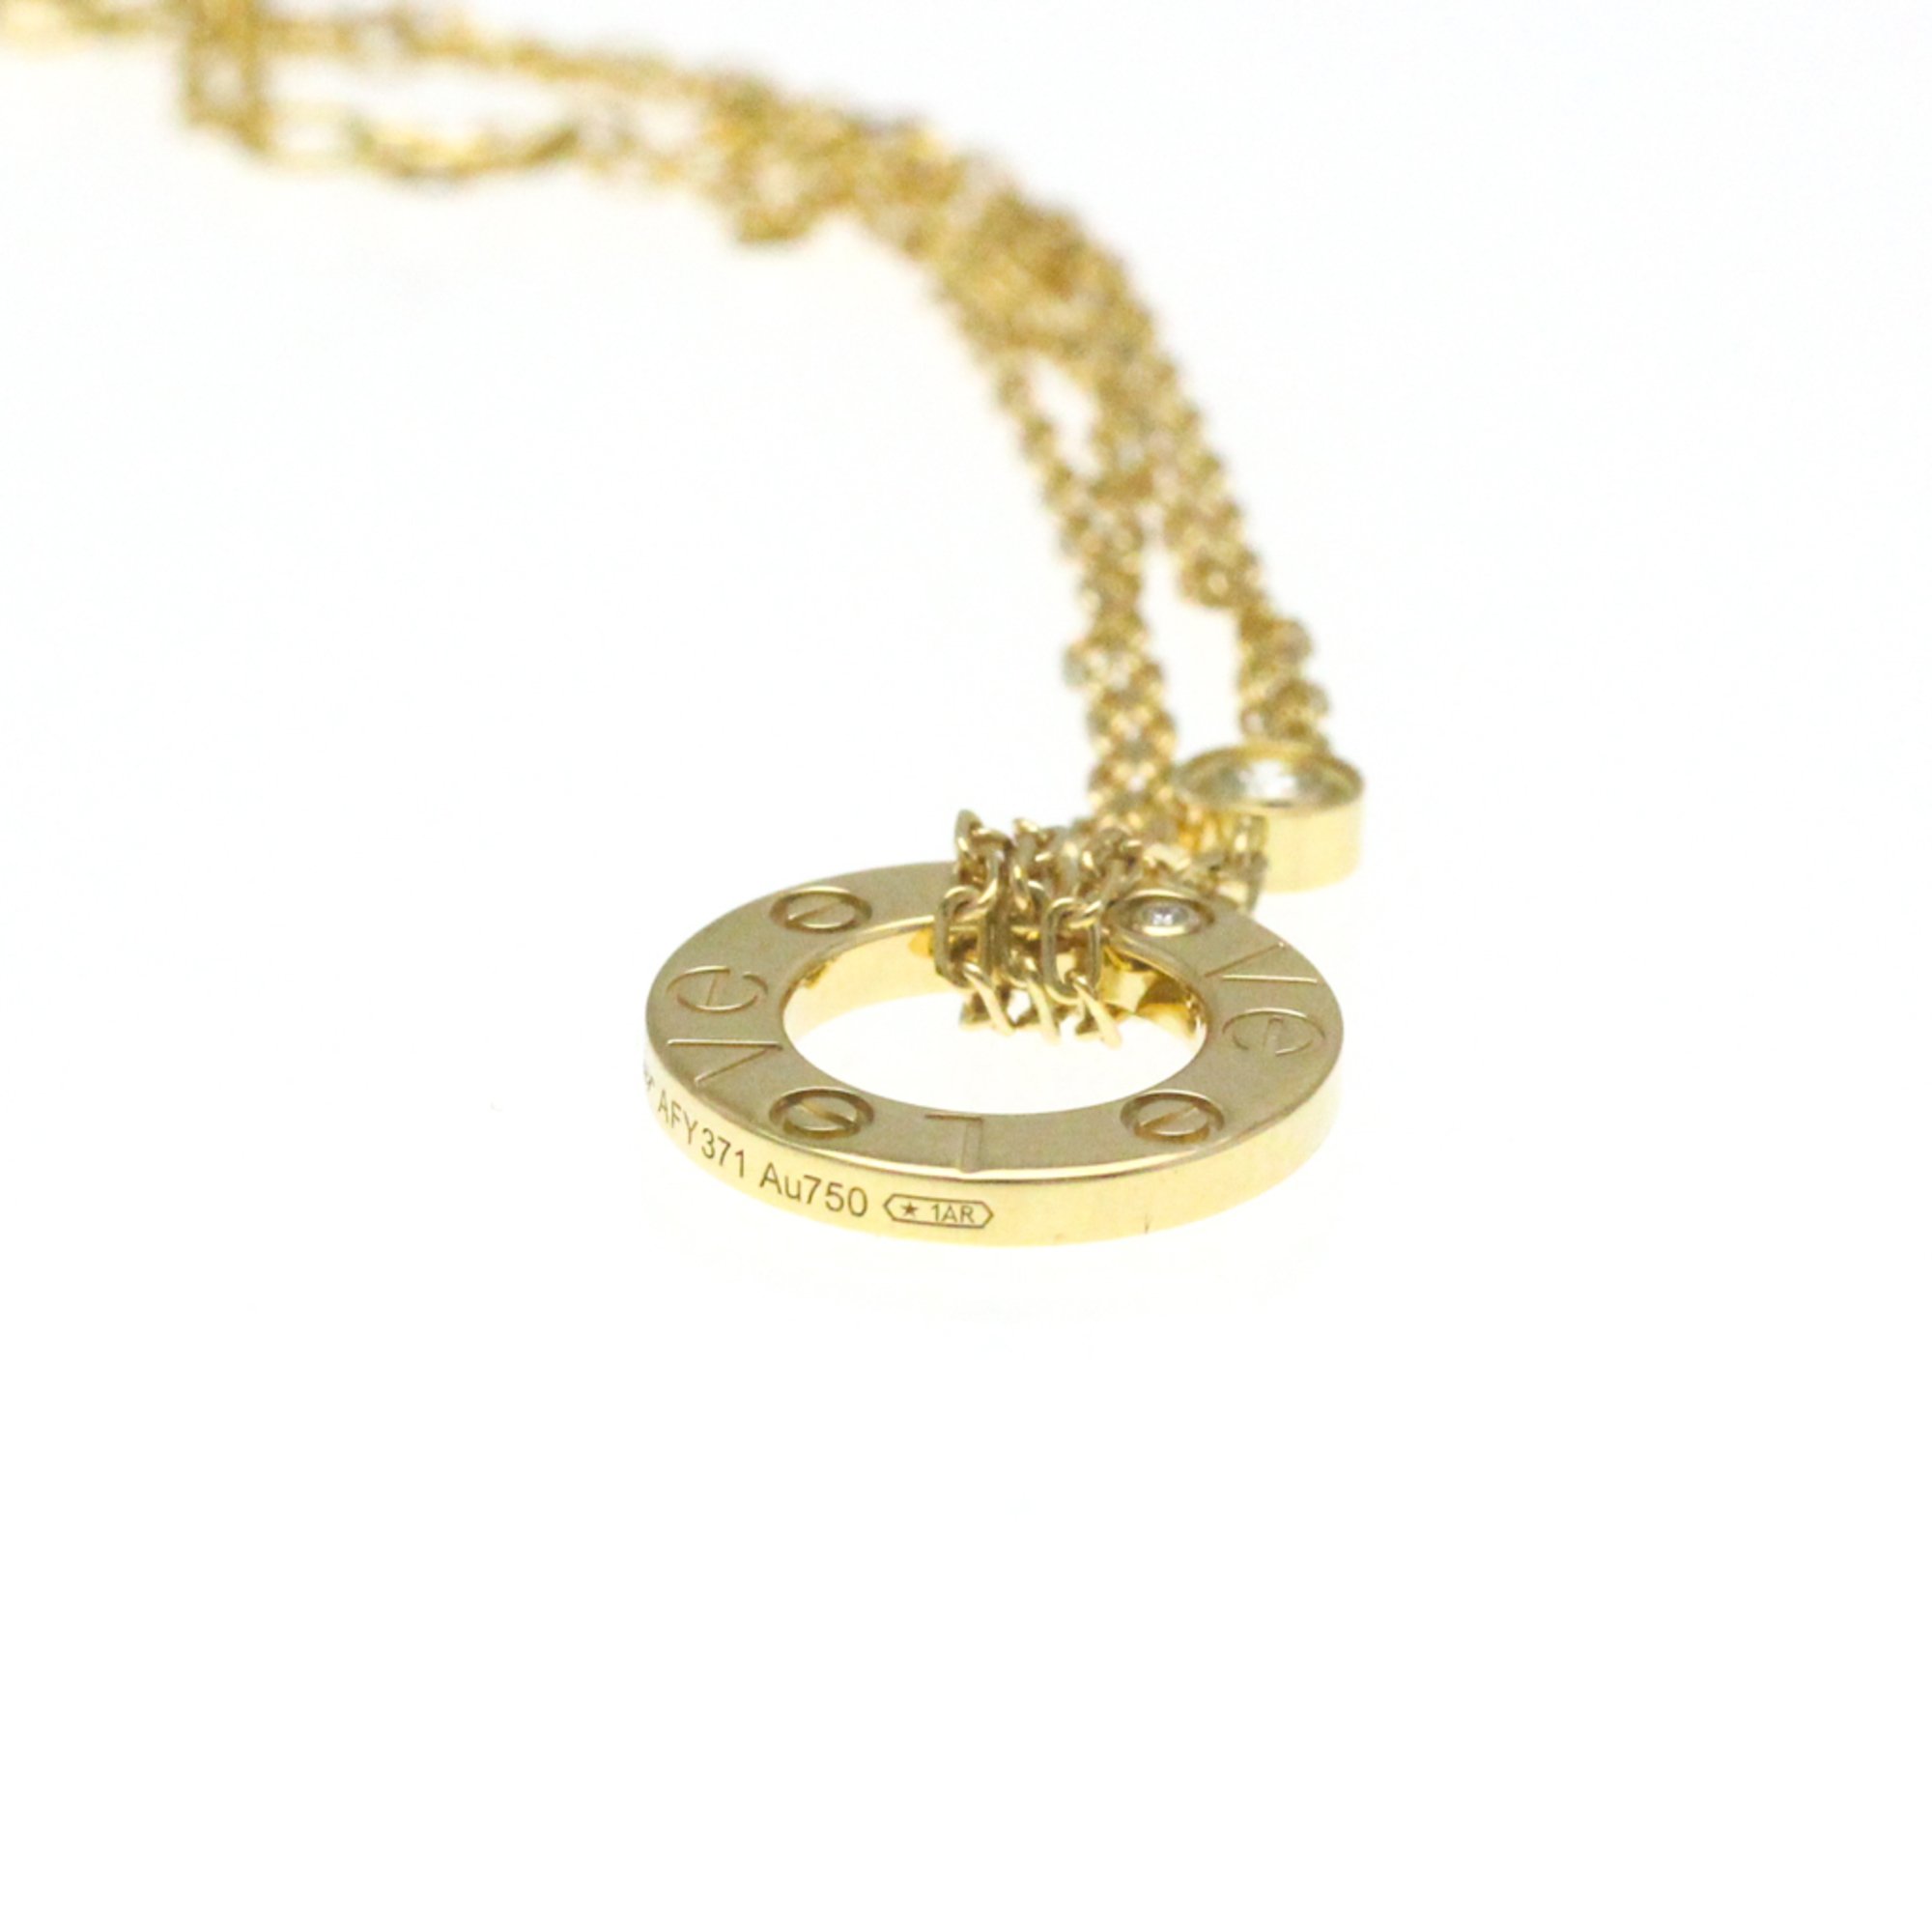 Cartier Love Circle Bracelet B6038300 Yellow Gold (18K) Diamond Charm Bracelet Carat/0.03 Gold